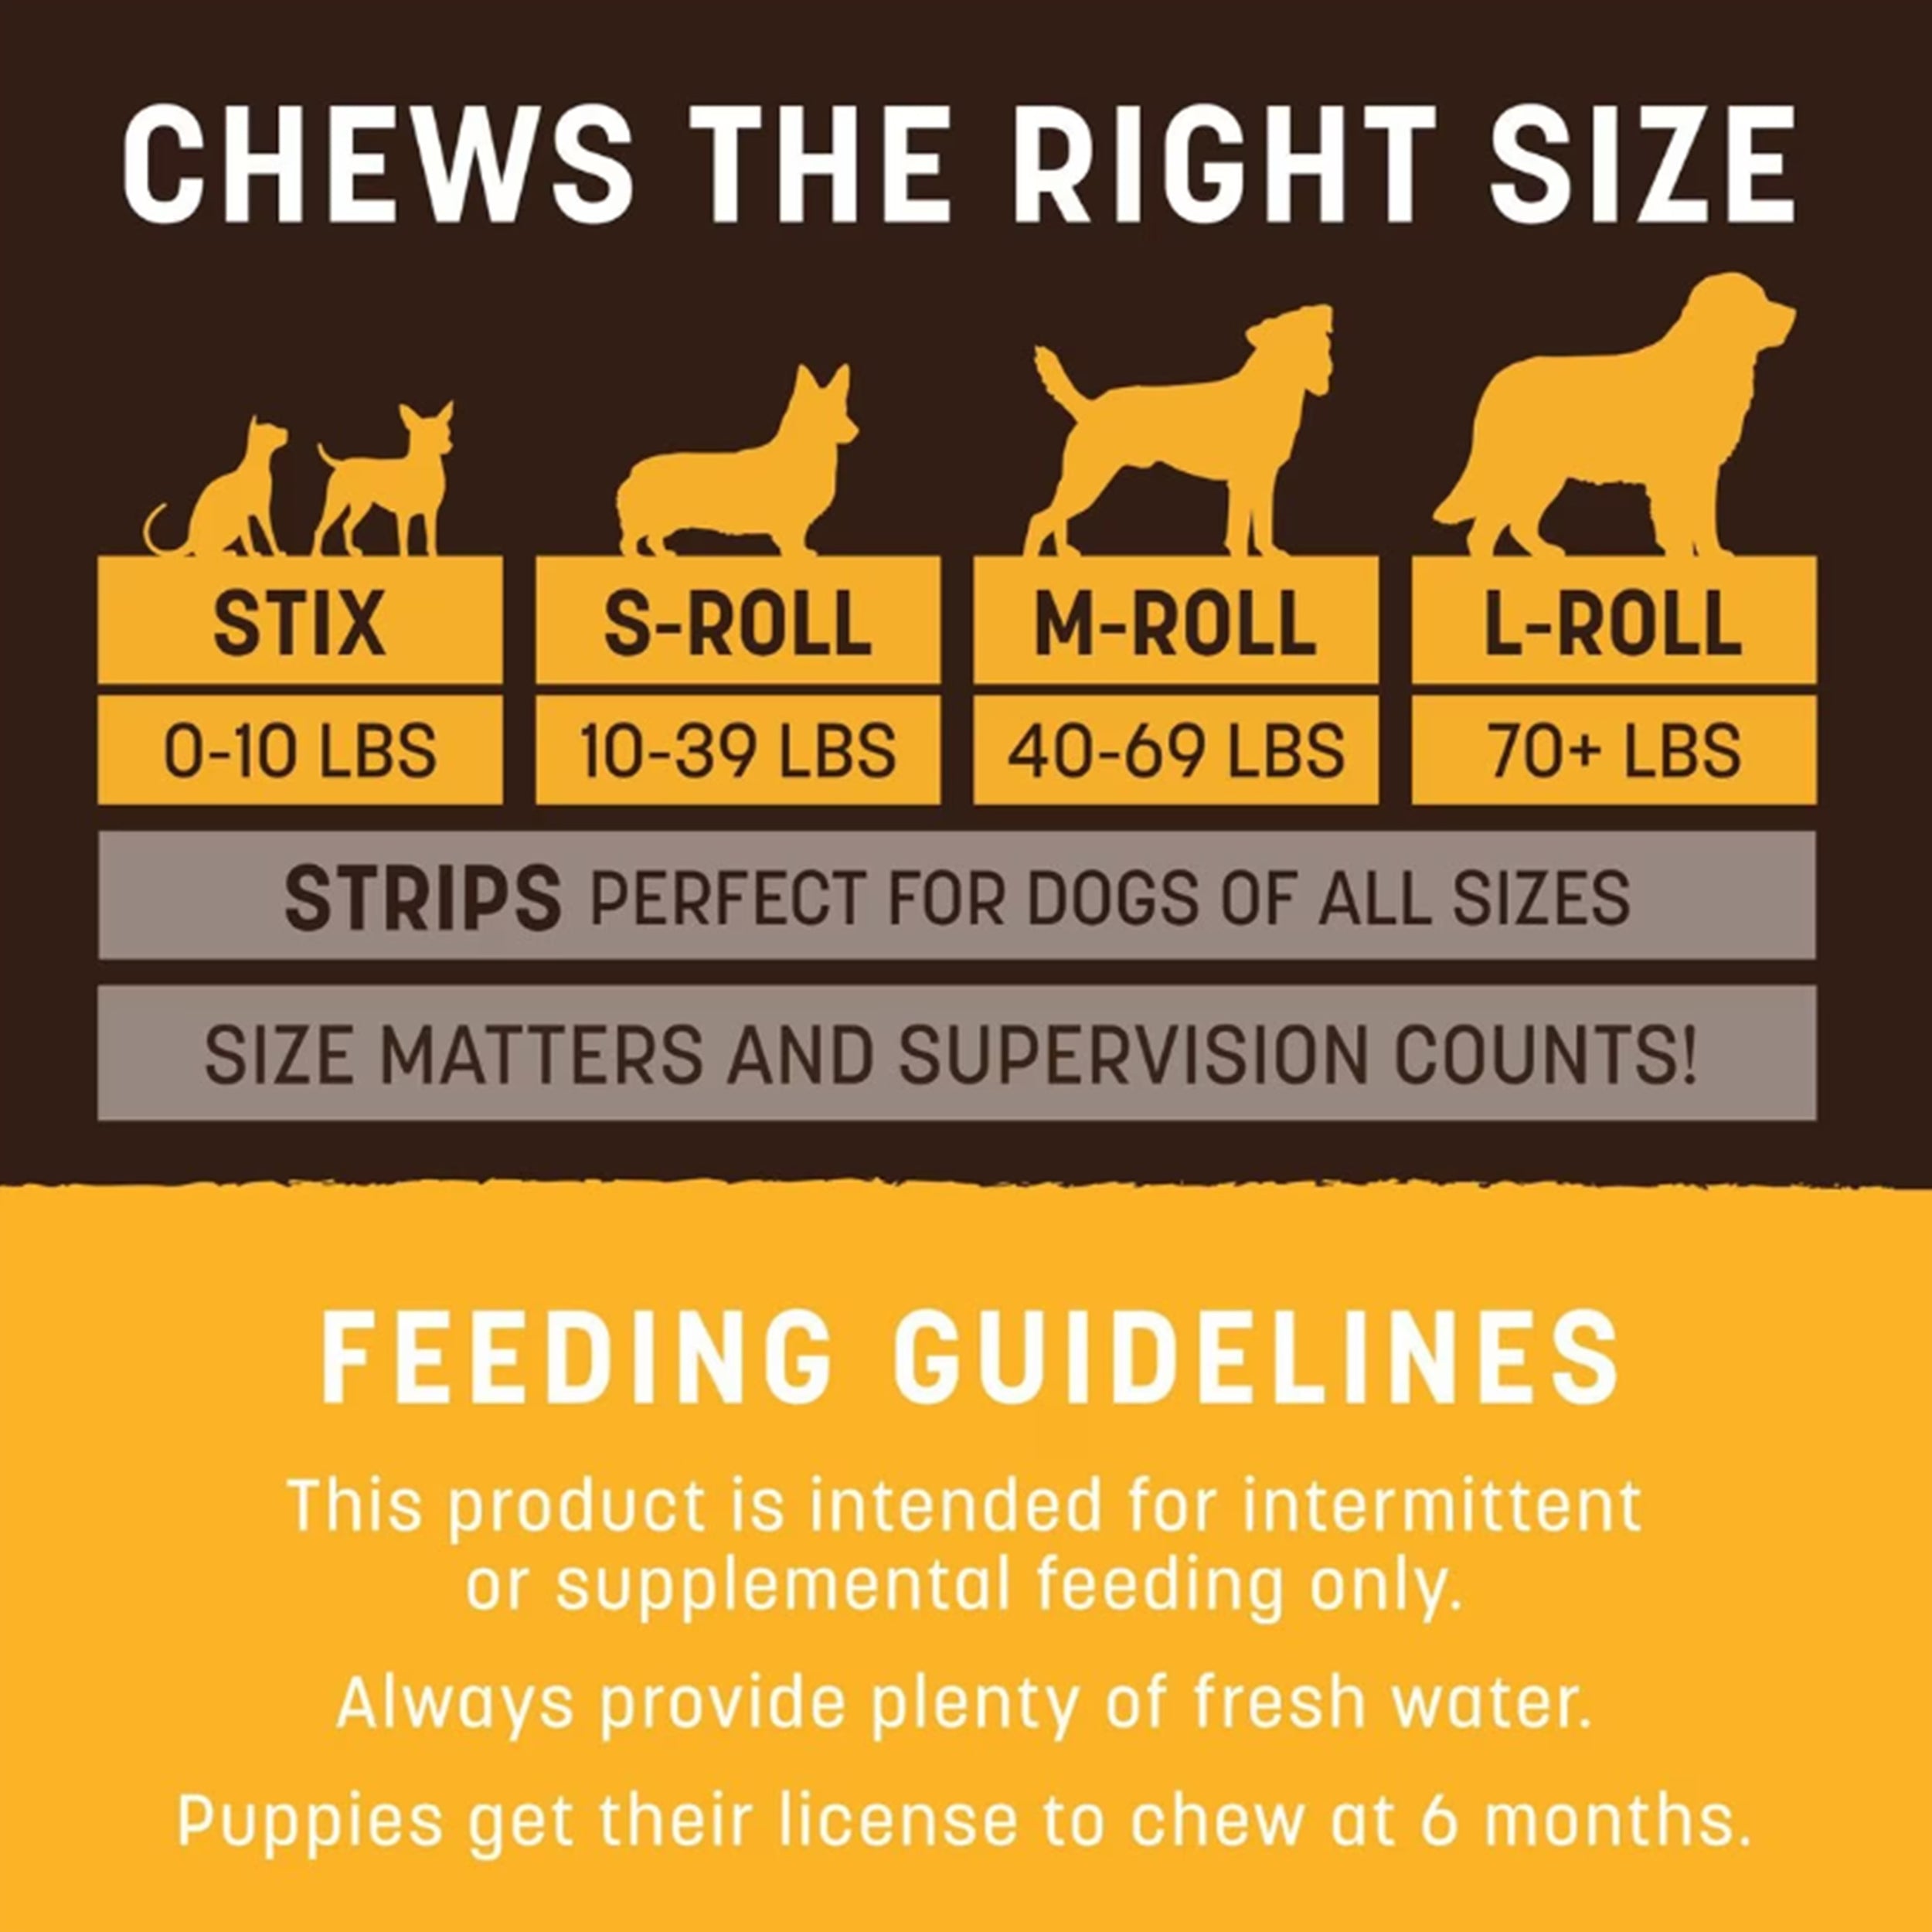 Earth Animal No-Hide Rolls Long Lasting Natural Rawhide Alternative Peanut Butter Vegetarian Recipe Chew Dog Treats